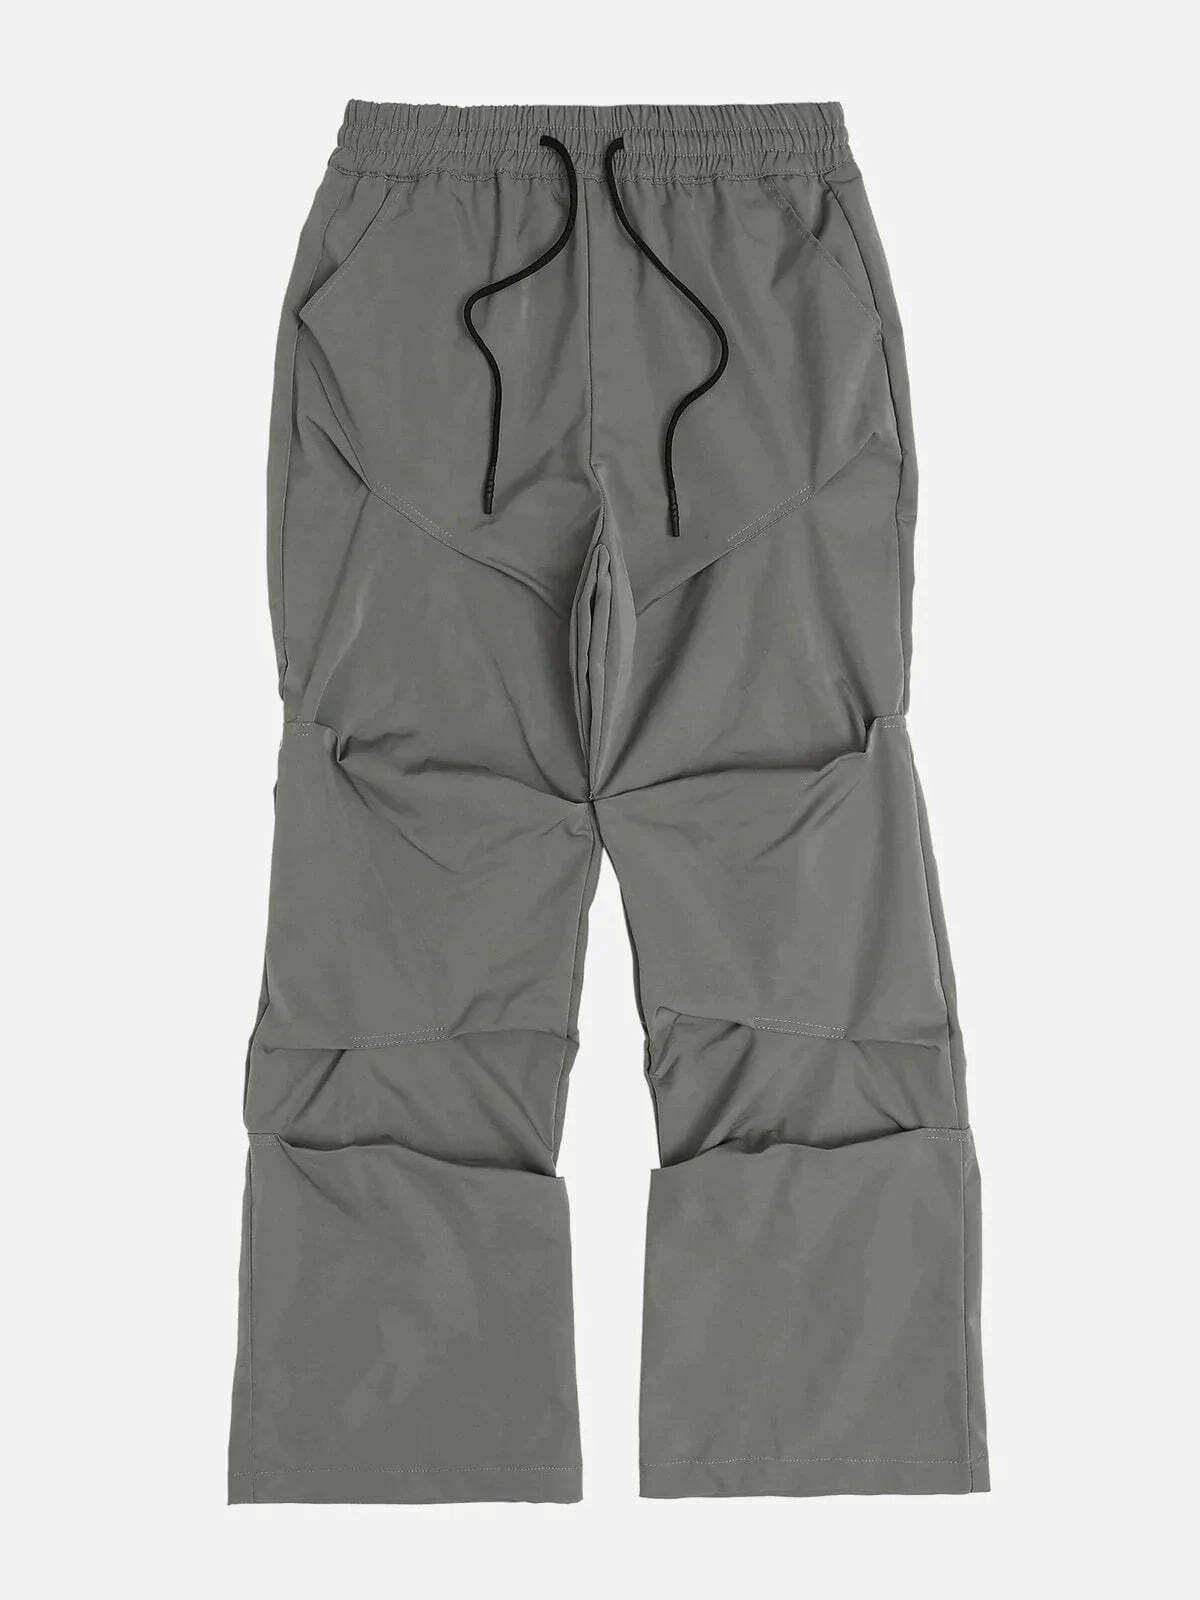 layered pleated pants edgy & versatile streetwear 5747